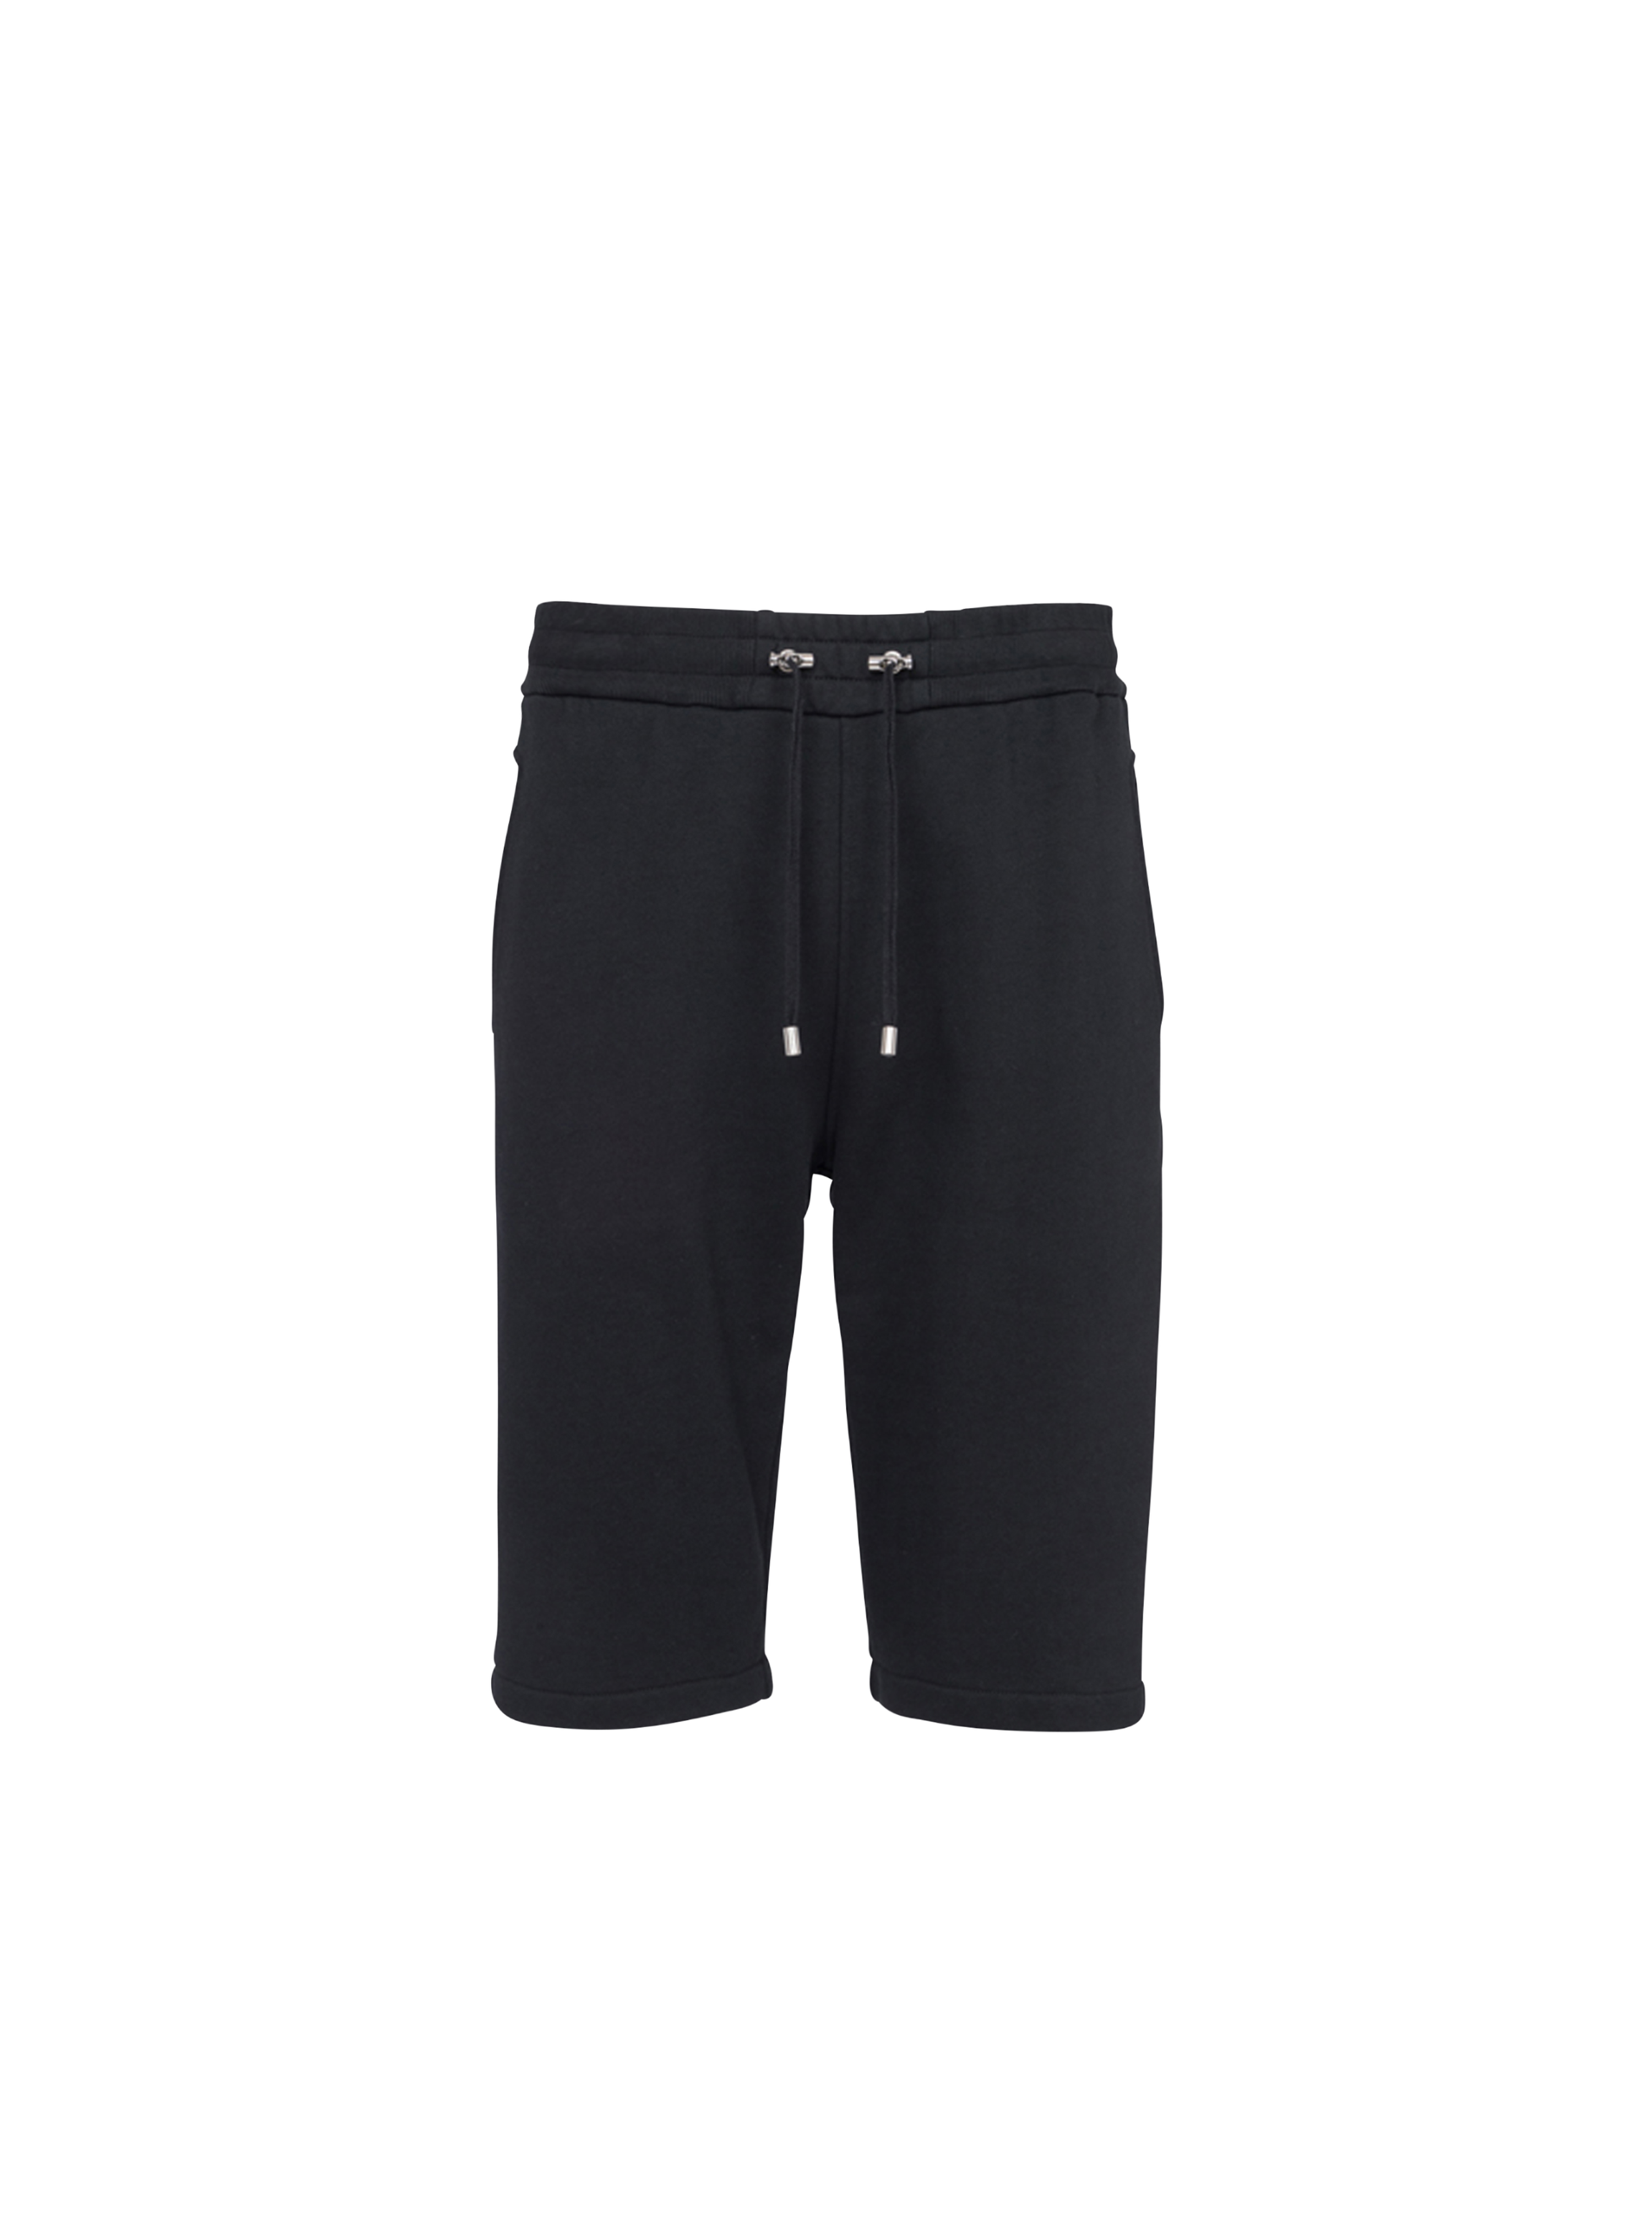 Shorts in cotone con logo Balmain Paris floccato, nero